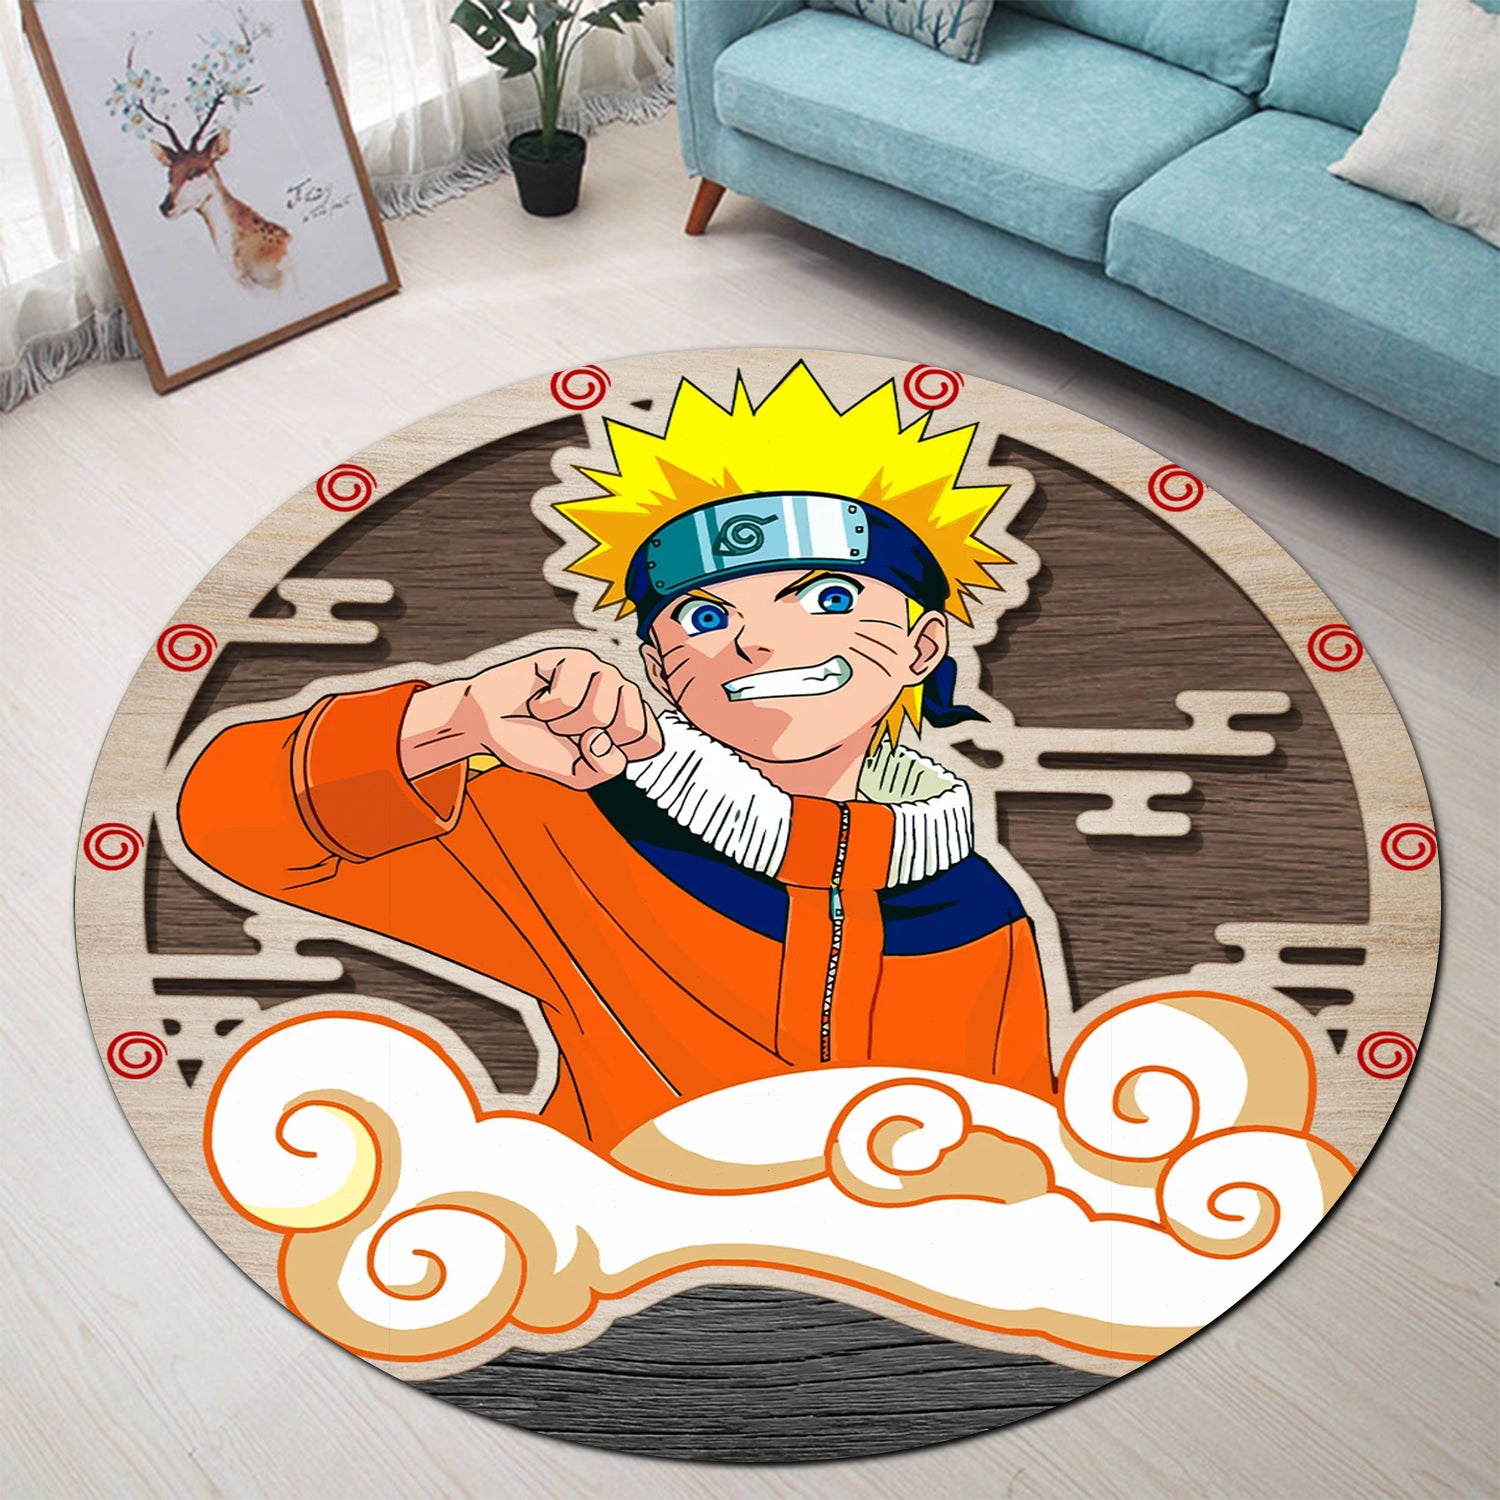 Naruto Round Carpet Rug Bedroom Livingroom Home Decor Nearkii